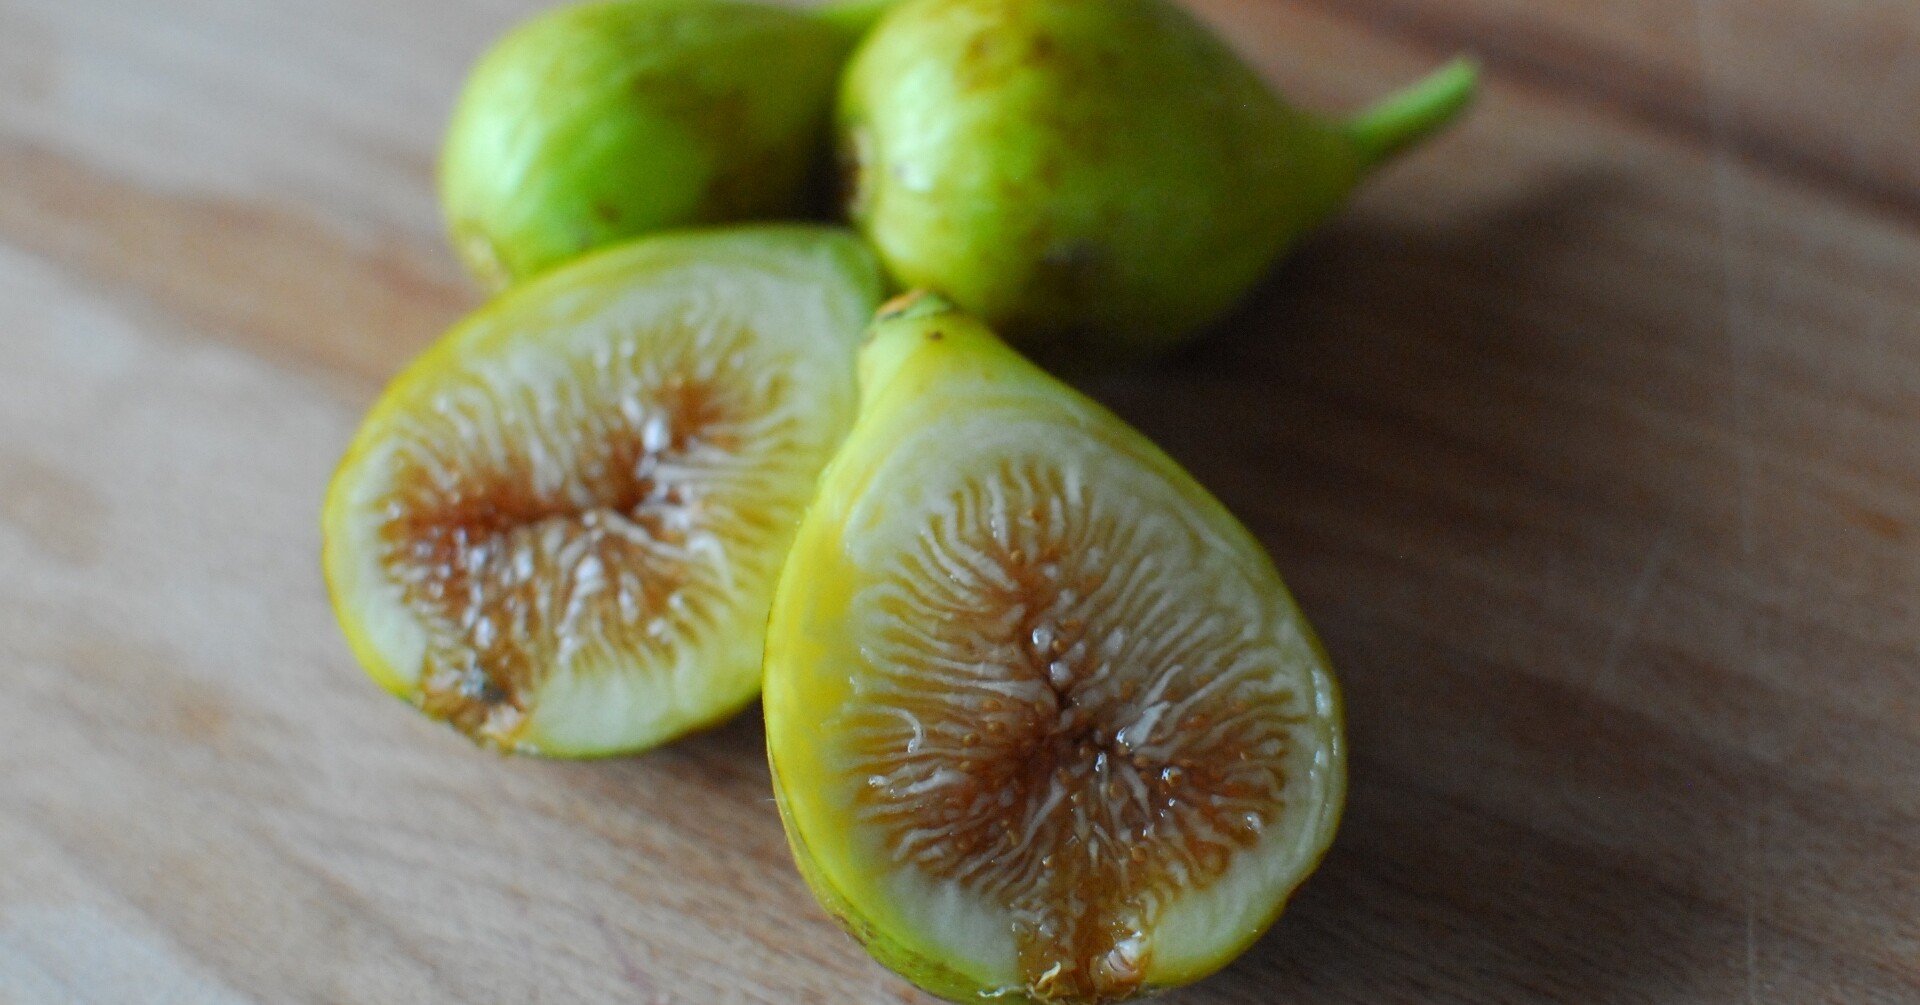 Fig Varieties Lsu Everbearing Lsu エバービーリング 世界のいちじく育てよう まるはち果実園 Note